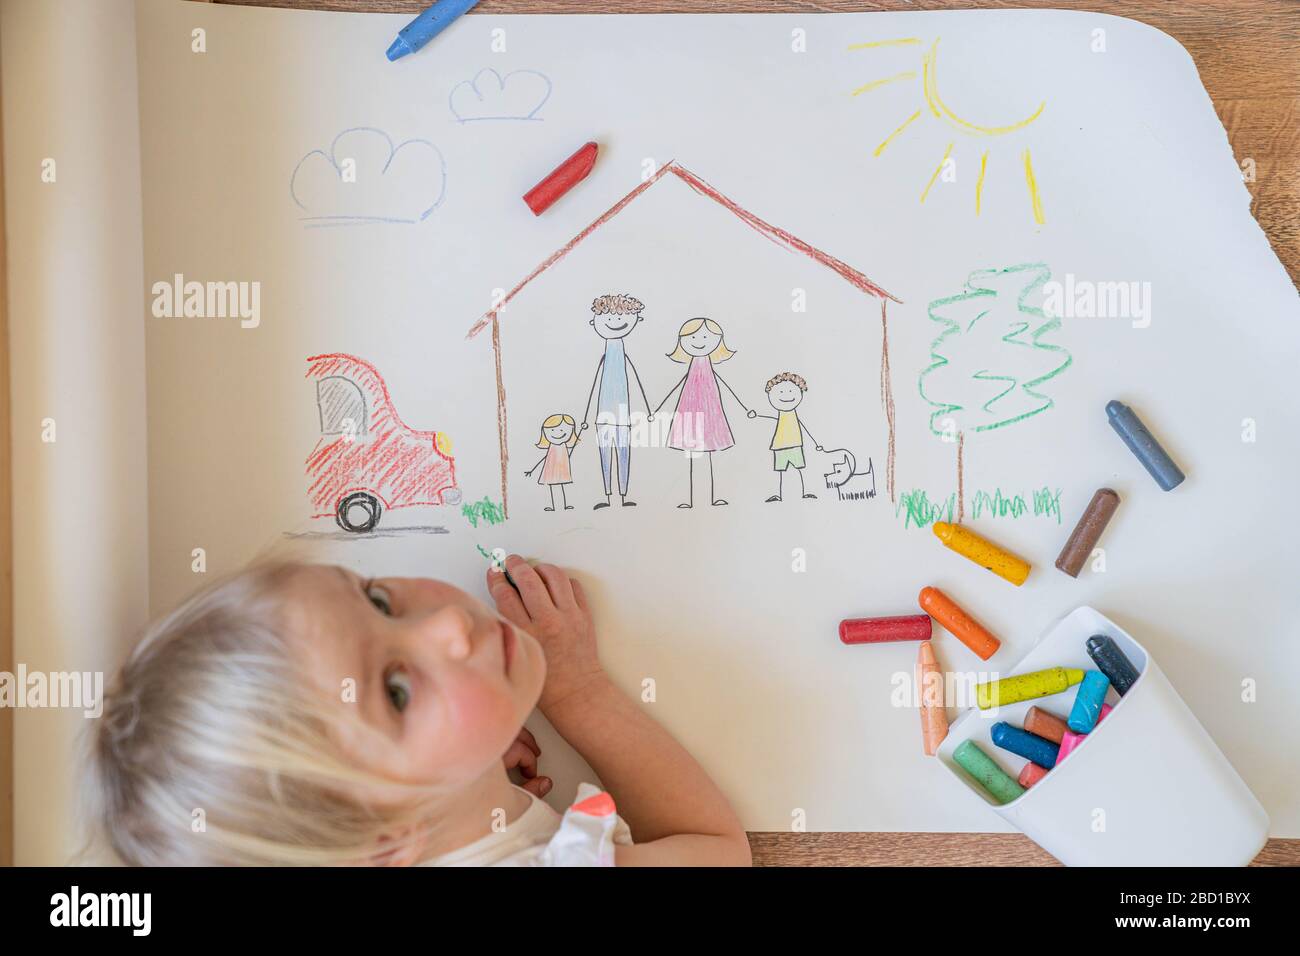 https://c8.alamy.com/comp/2BD1BYX/kids-drawing-happy-family-inside-the-house-2BD1BYX.jpg